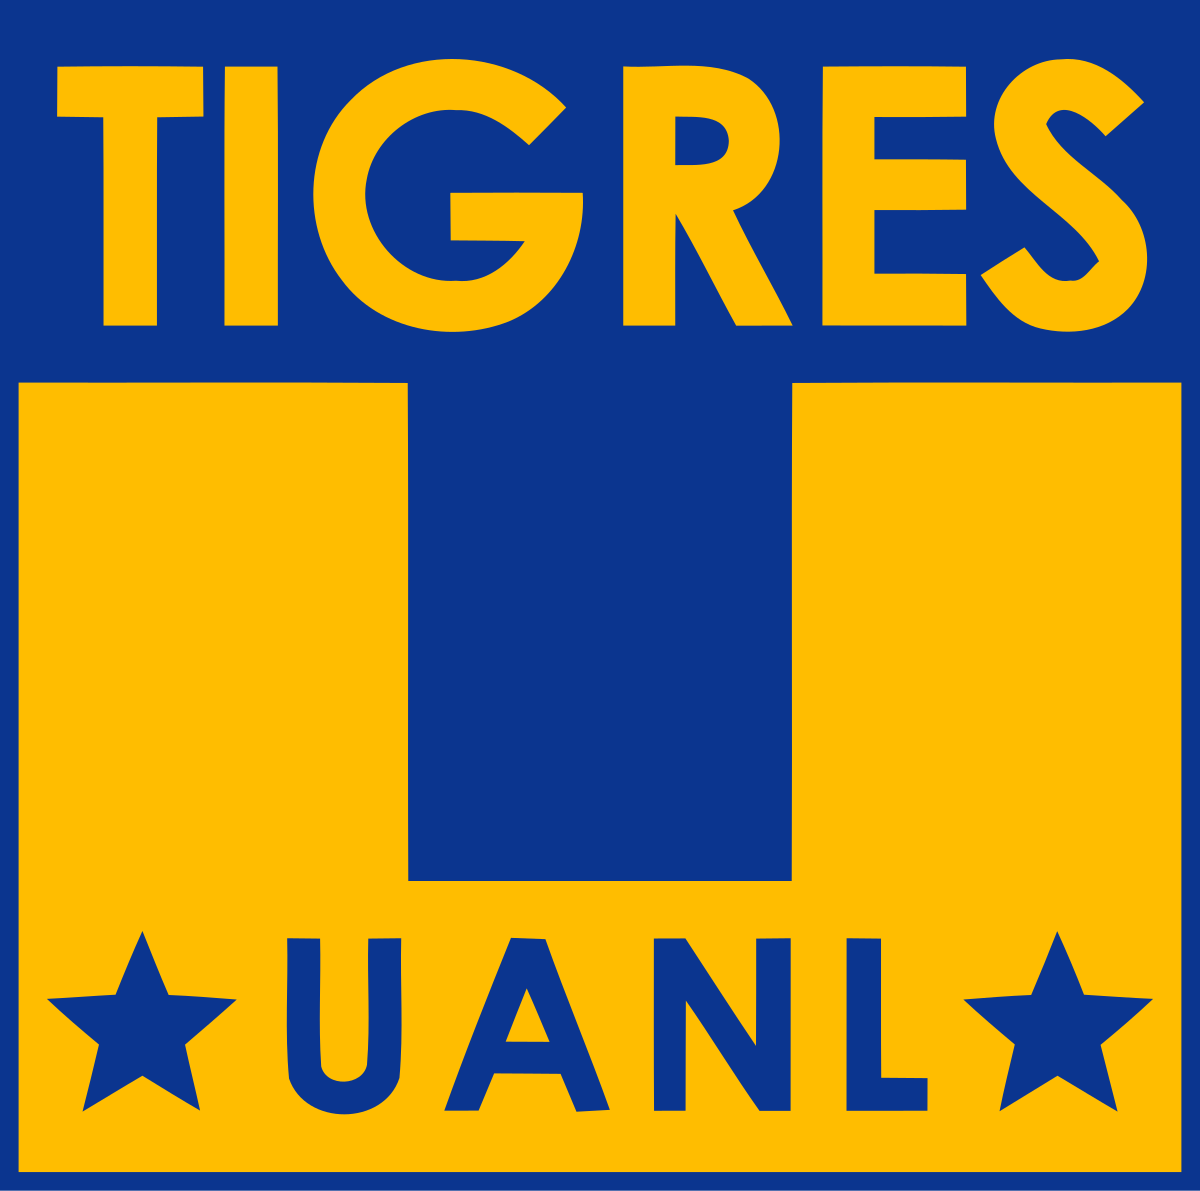 Tigres de la UANL - Wikipedia bahasa Indonesia, ensiklopedia bebas